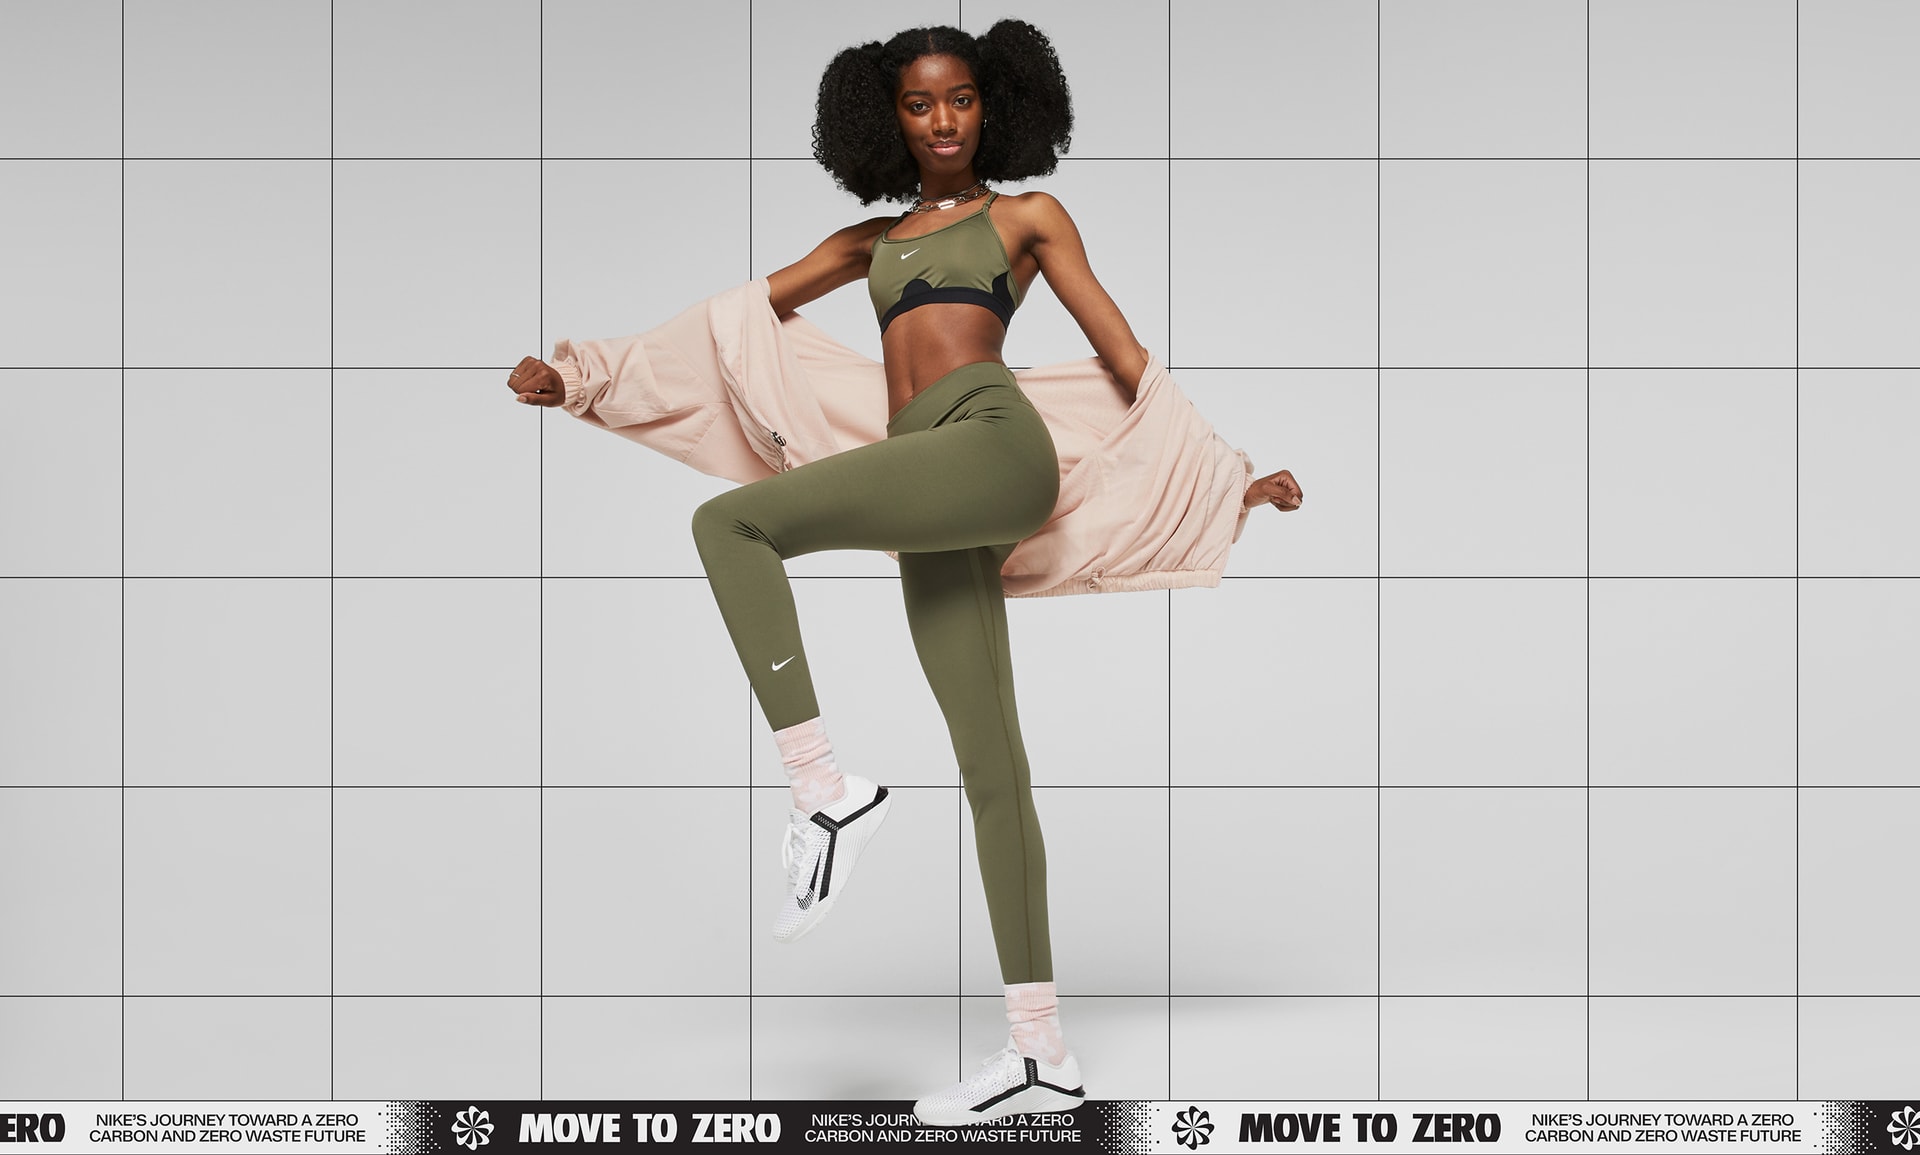 Nike Dri-FIT One Women's Mid-Rise Leggings Tights DD0252-010 Size XS  Black/White